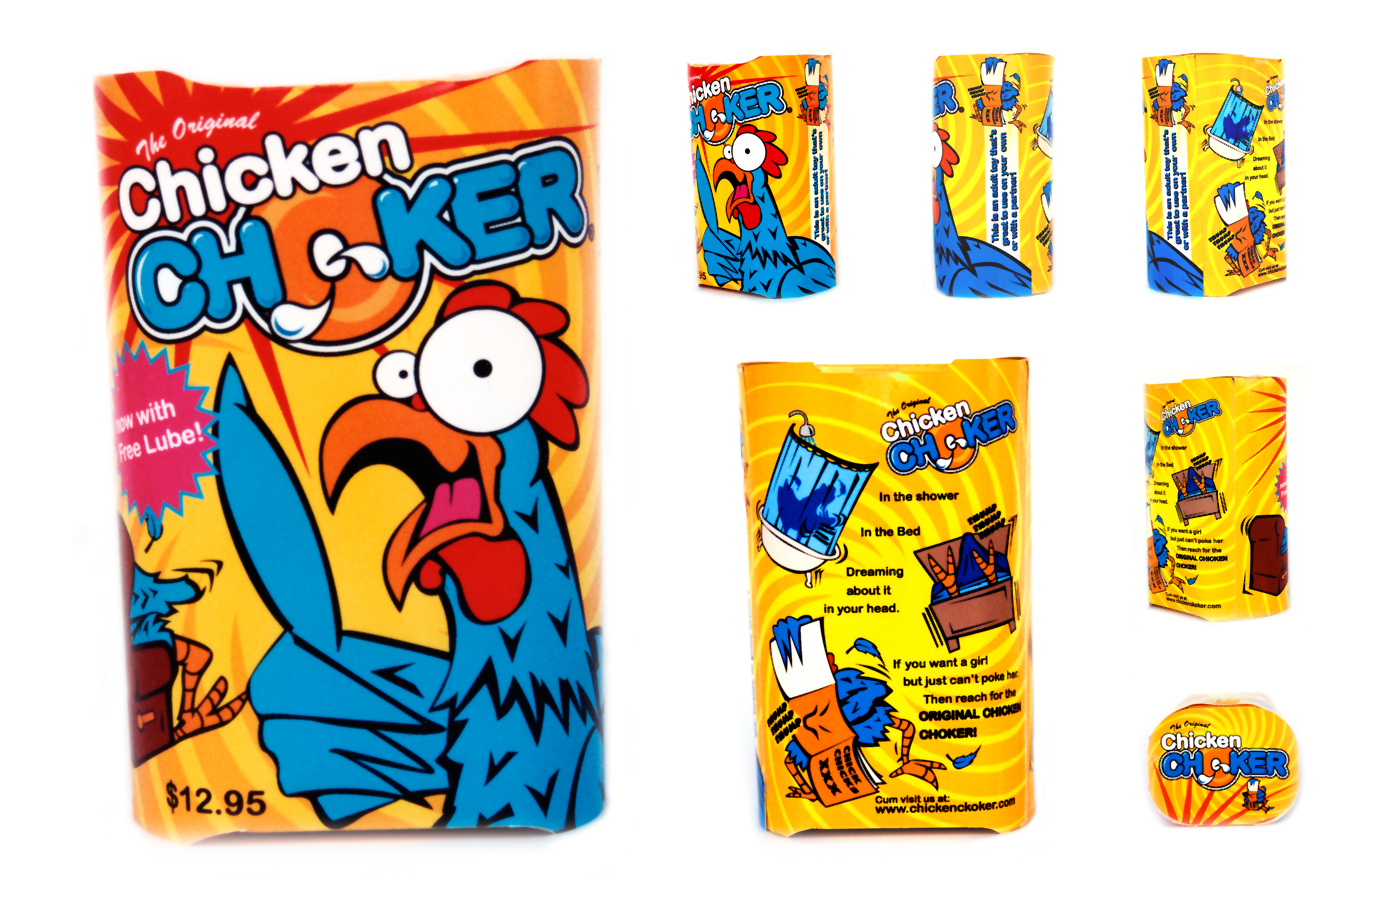 Chicken Choker 3587